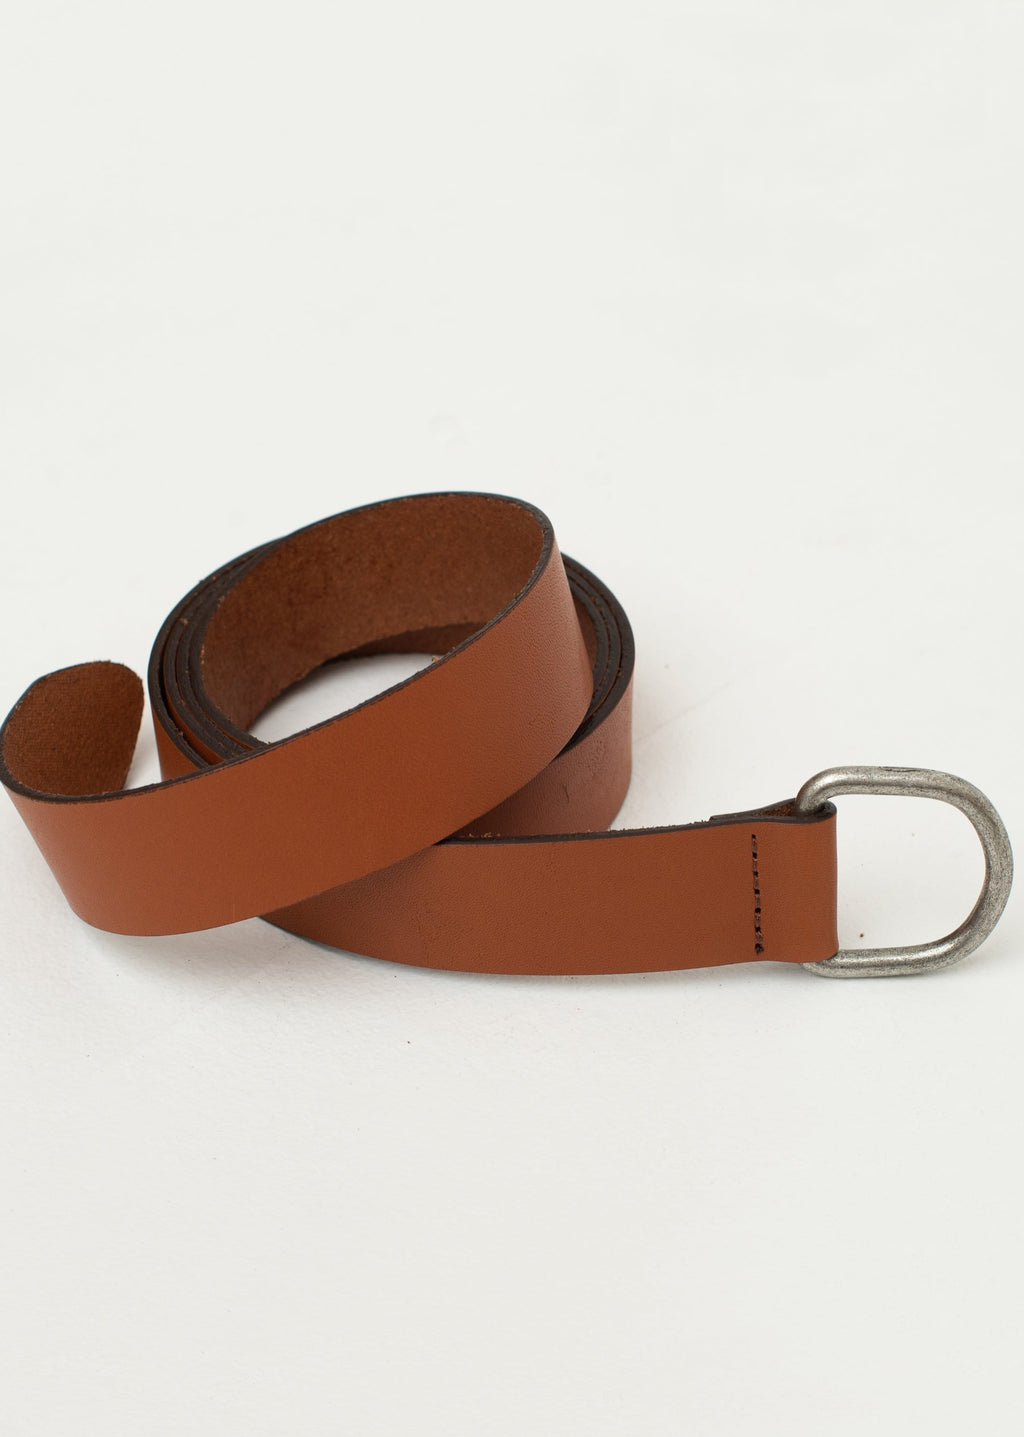 Dark brown leather D-ring belt